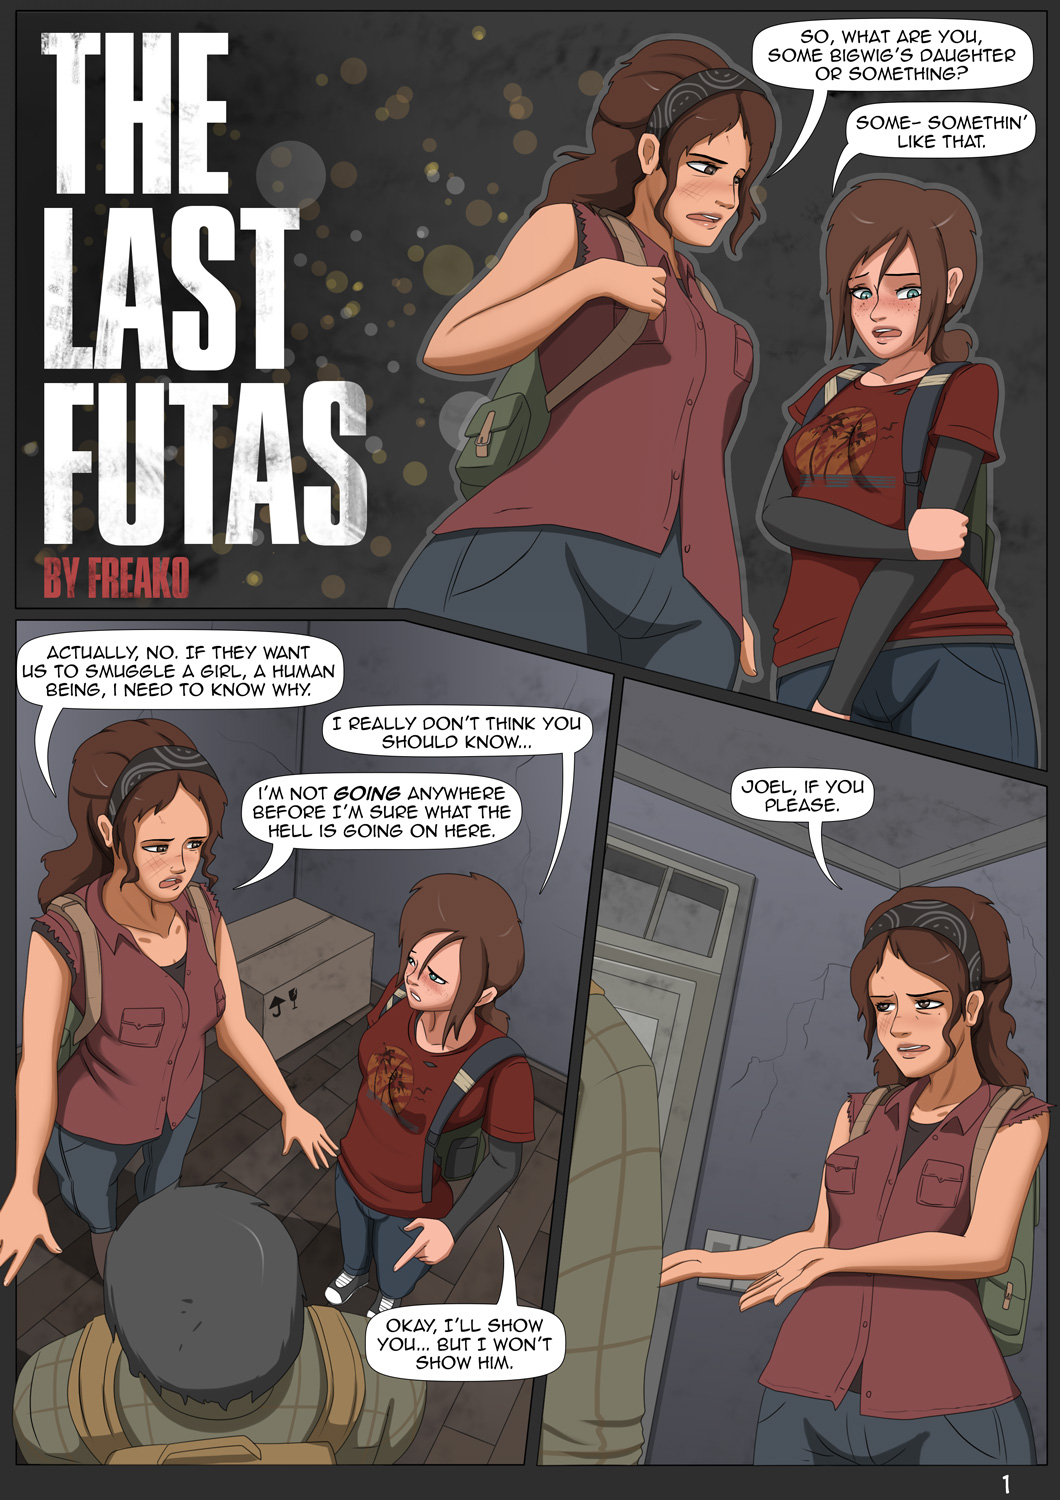 Read Freako The Last Futas The Last Of Us Hentai Porns Manga And